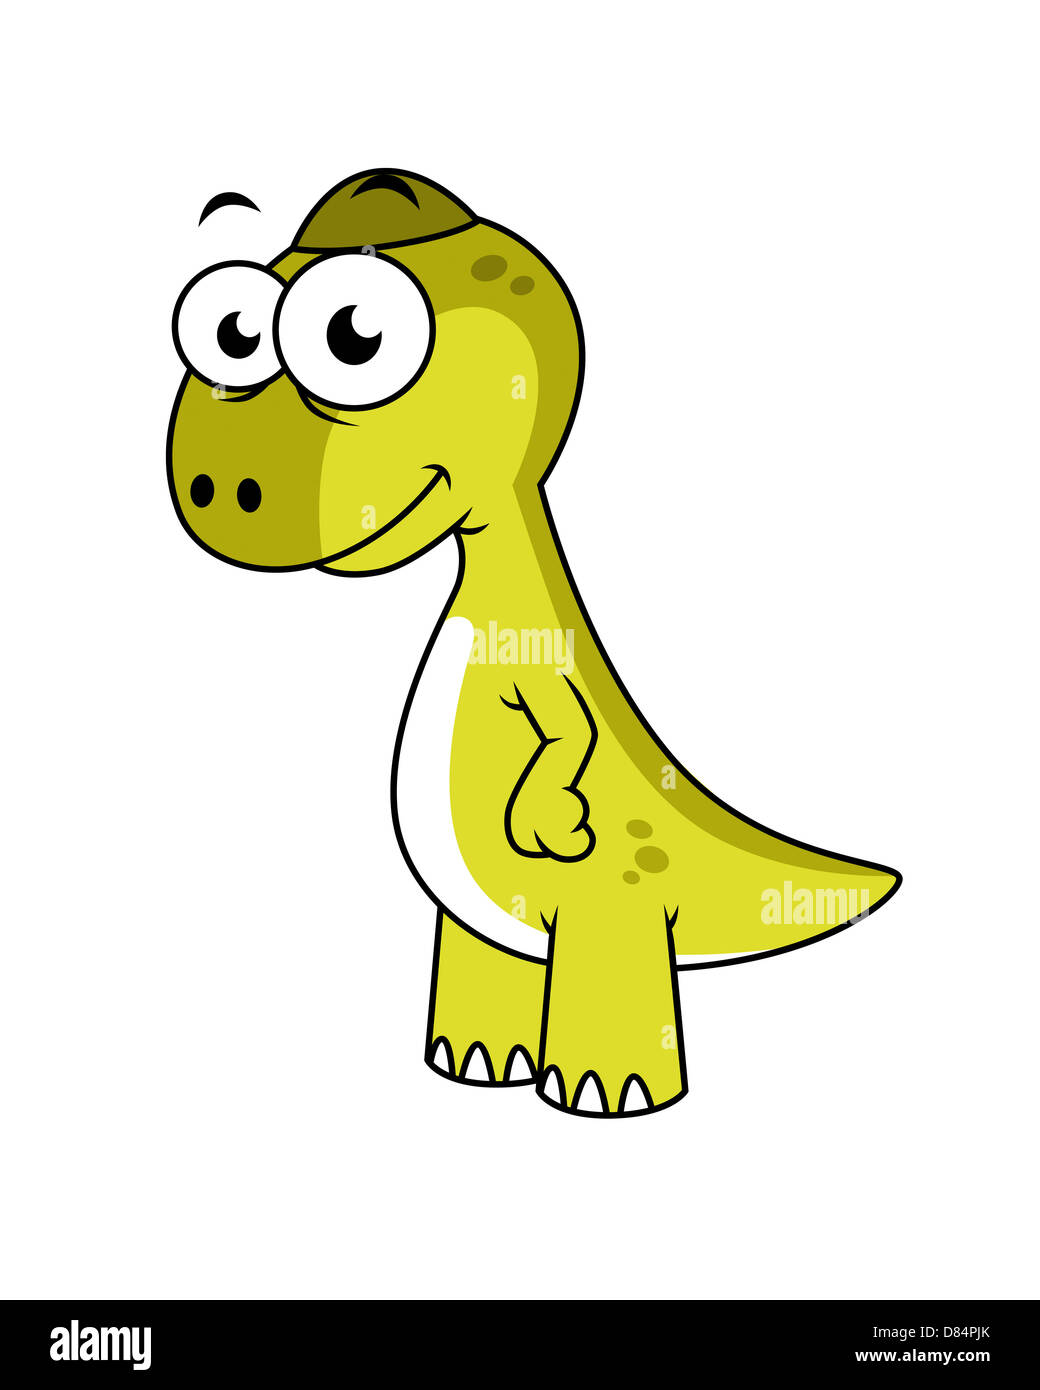 Cute illustration of a Pachycephalosaurus dinosaur. Stock Photo